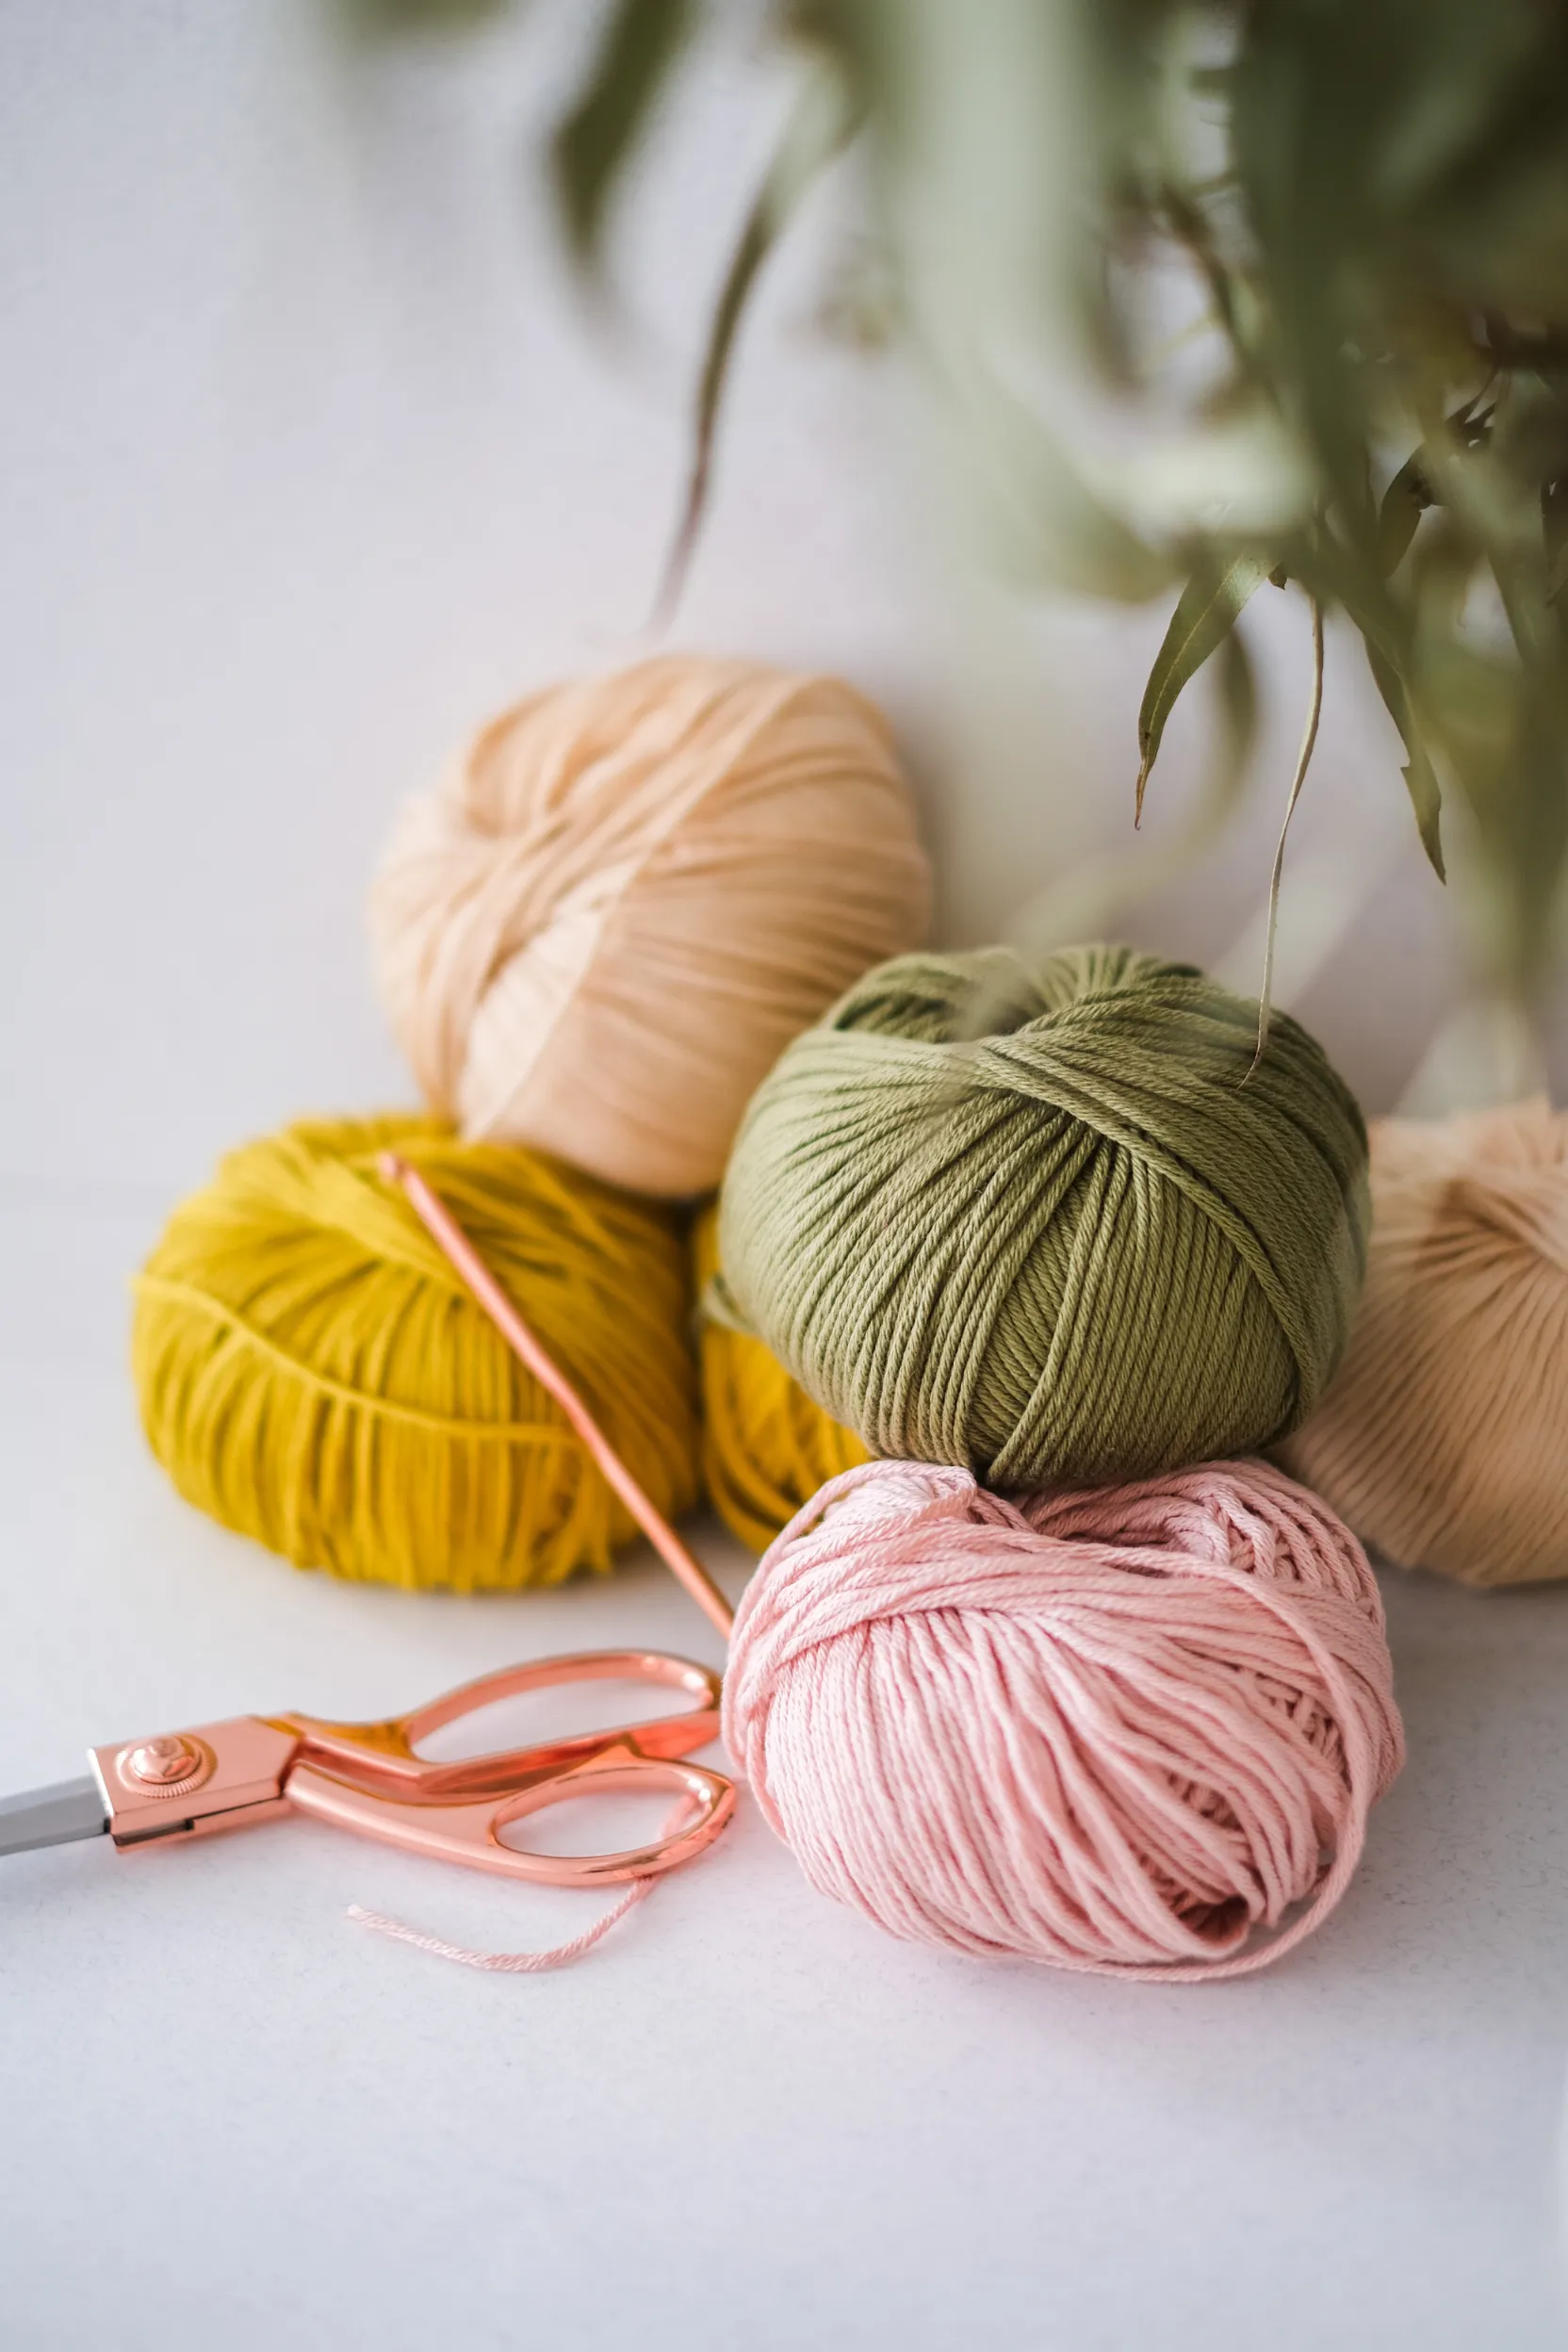 crochet essentials for beginners, crochet hook, yarn, scissors